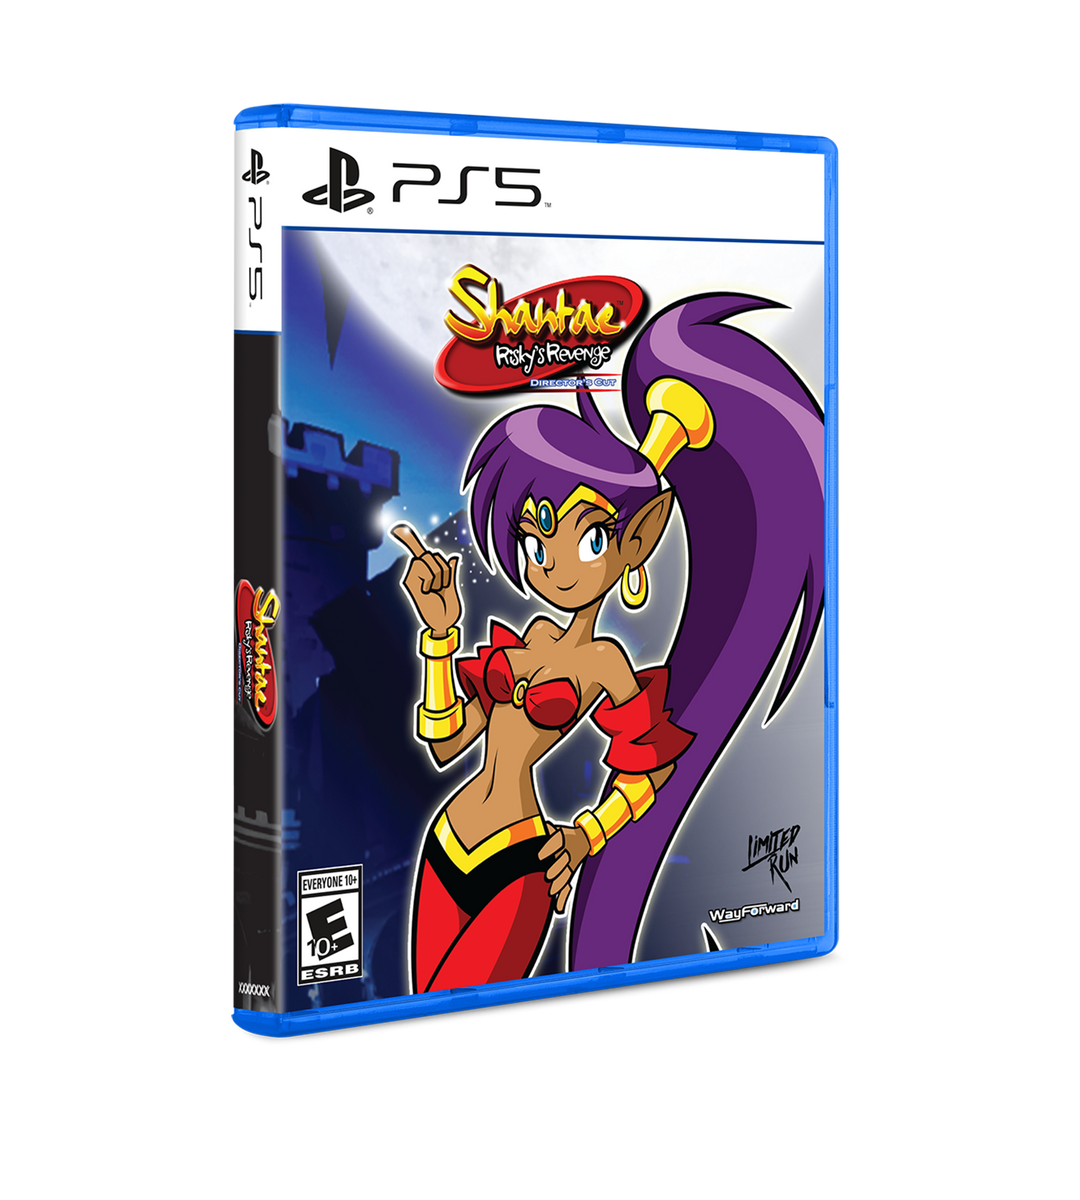 PS5 Limited Run #4: Shantae: Risky's Revenge - Director's Cut